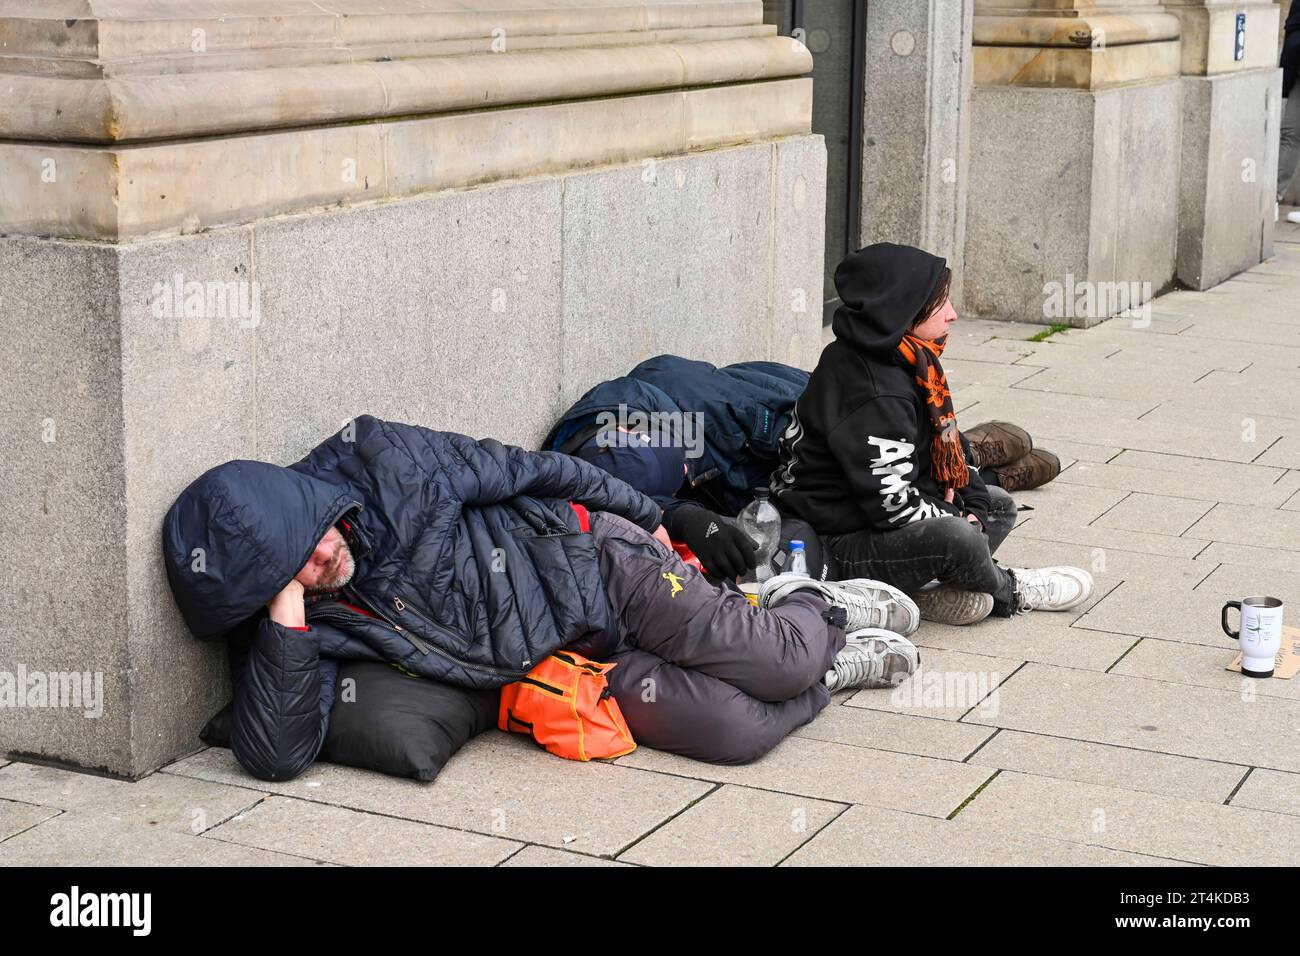 Odachlose Bettler, Jungfernstieg, Hamburg, Deutschland *** Homeless beggars, Jungfernstieg, Hamburg, Germany Credit: Imago/Alamy Live News Stock Photo